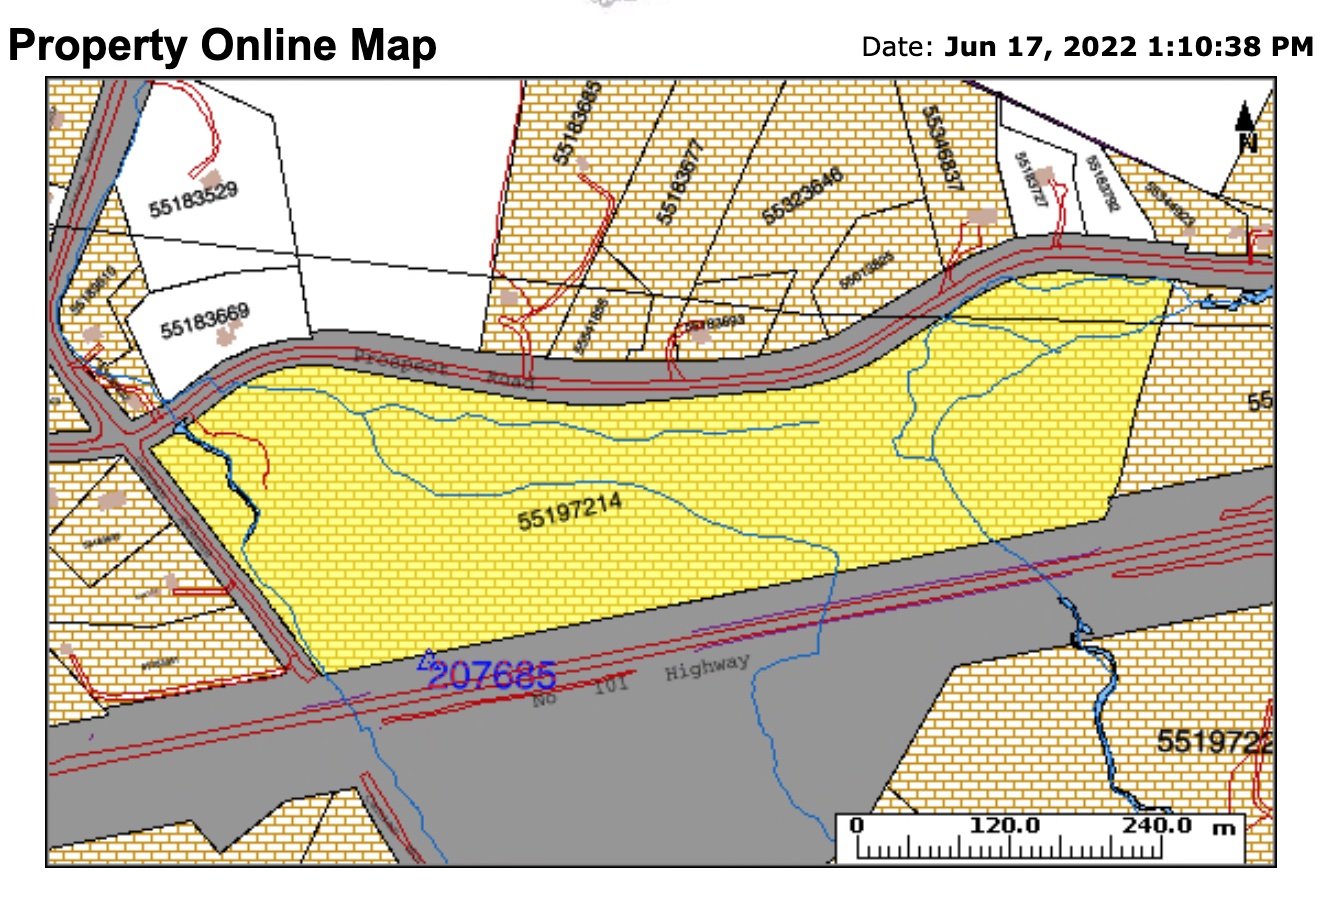 A Property Online Map.jpg